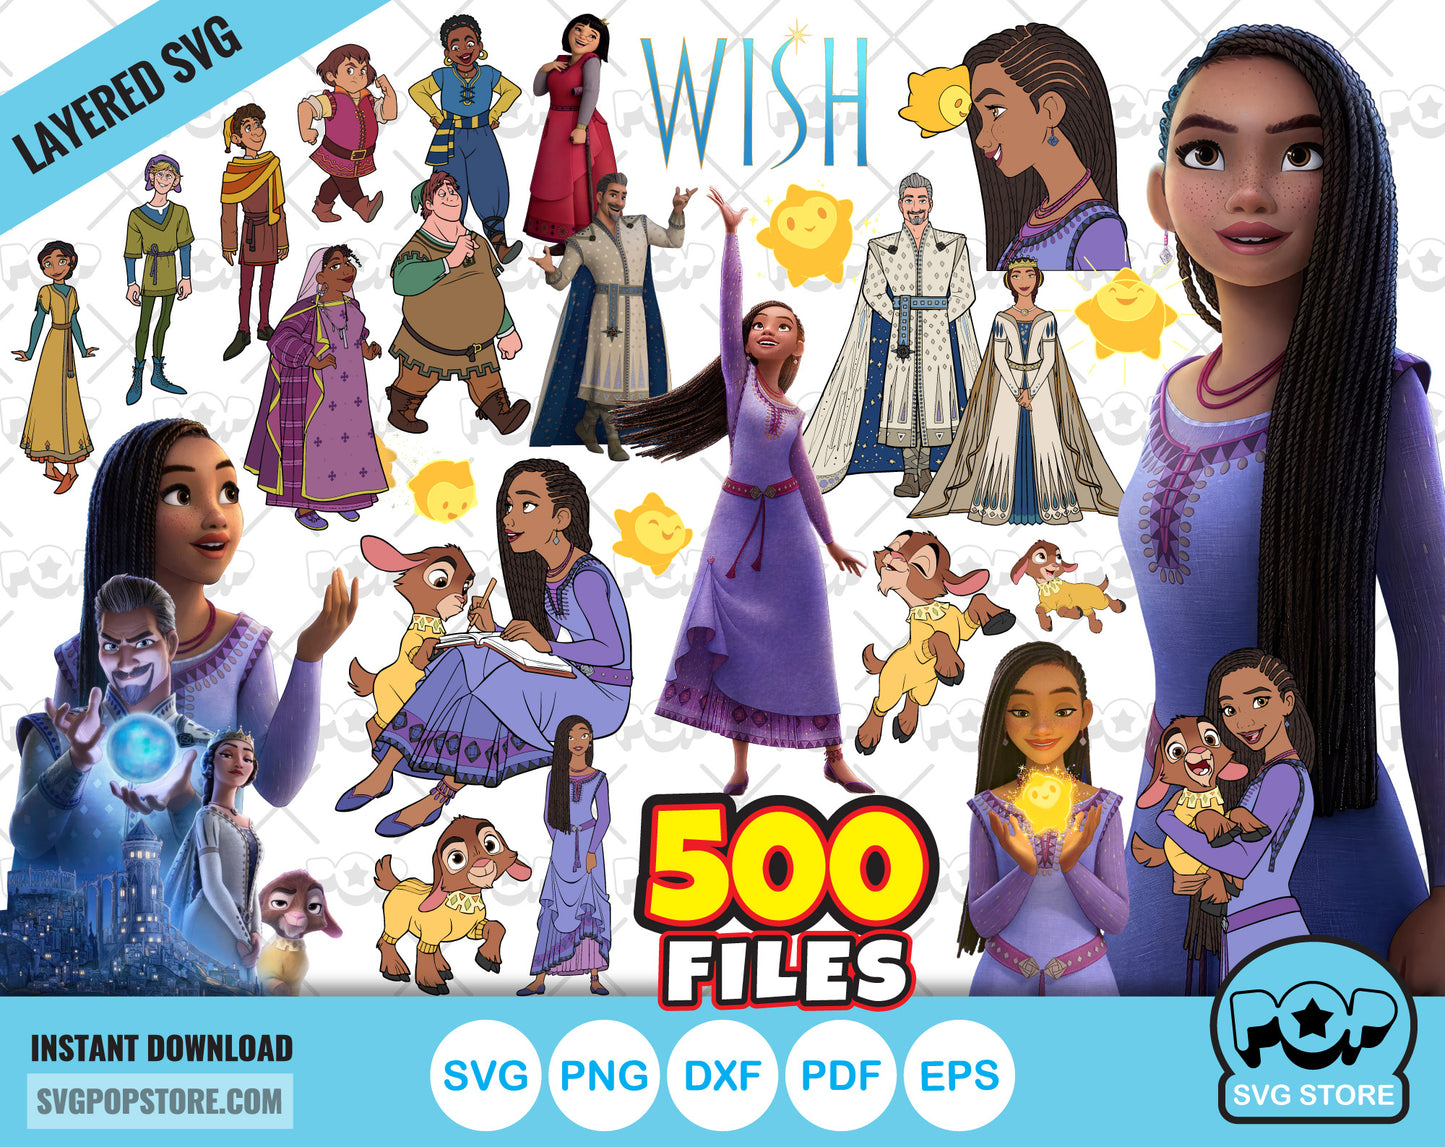 Wish clipart set, Disney Wish svg cut files for Cricut / Silhouette, Wish princess Asha svg, Wish png, dxf